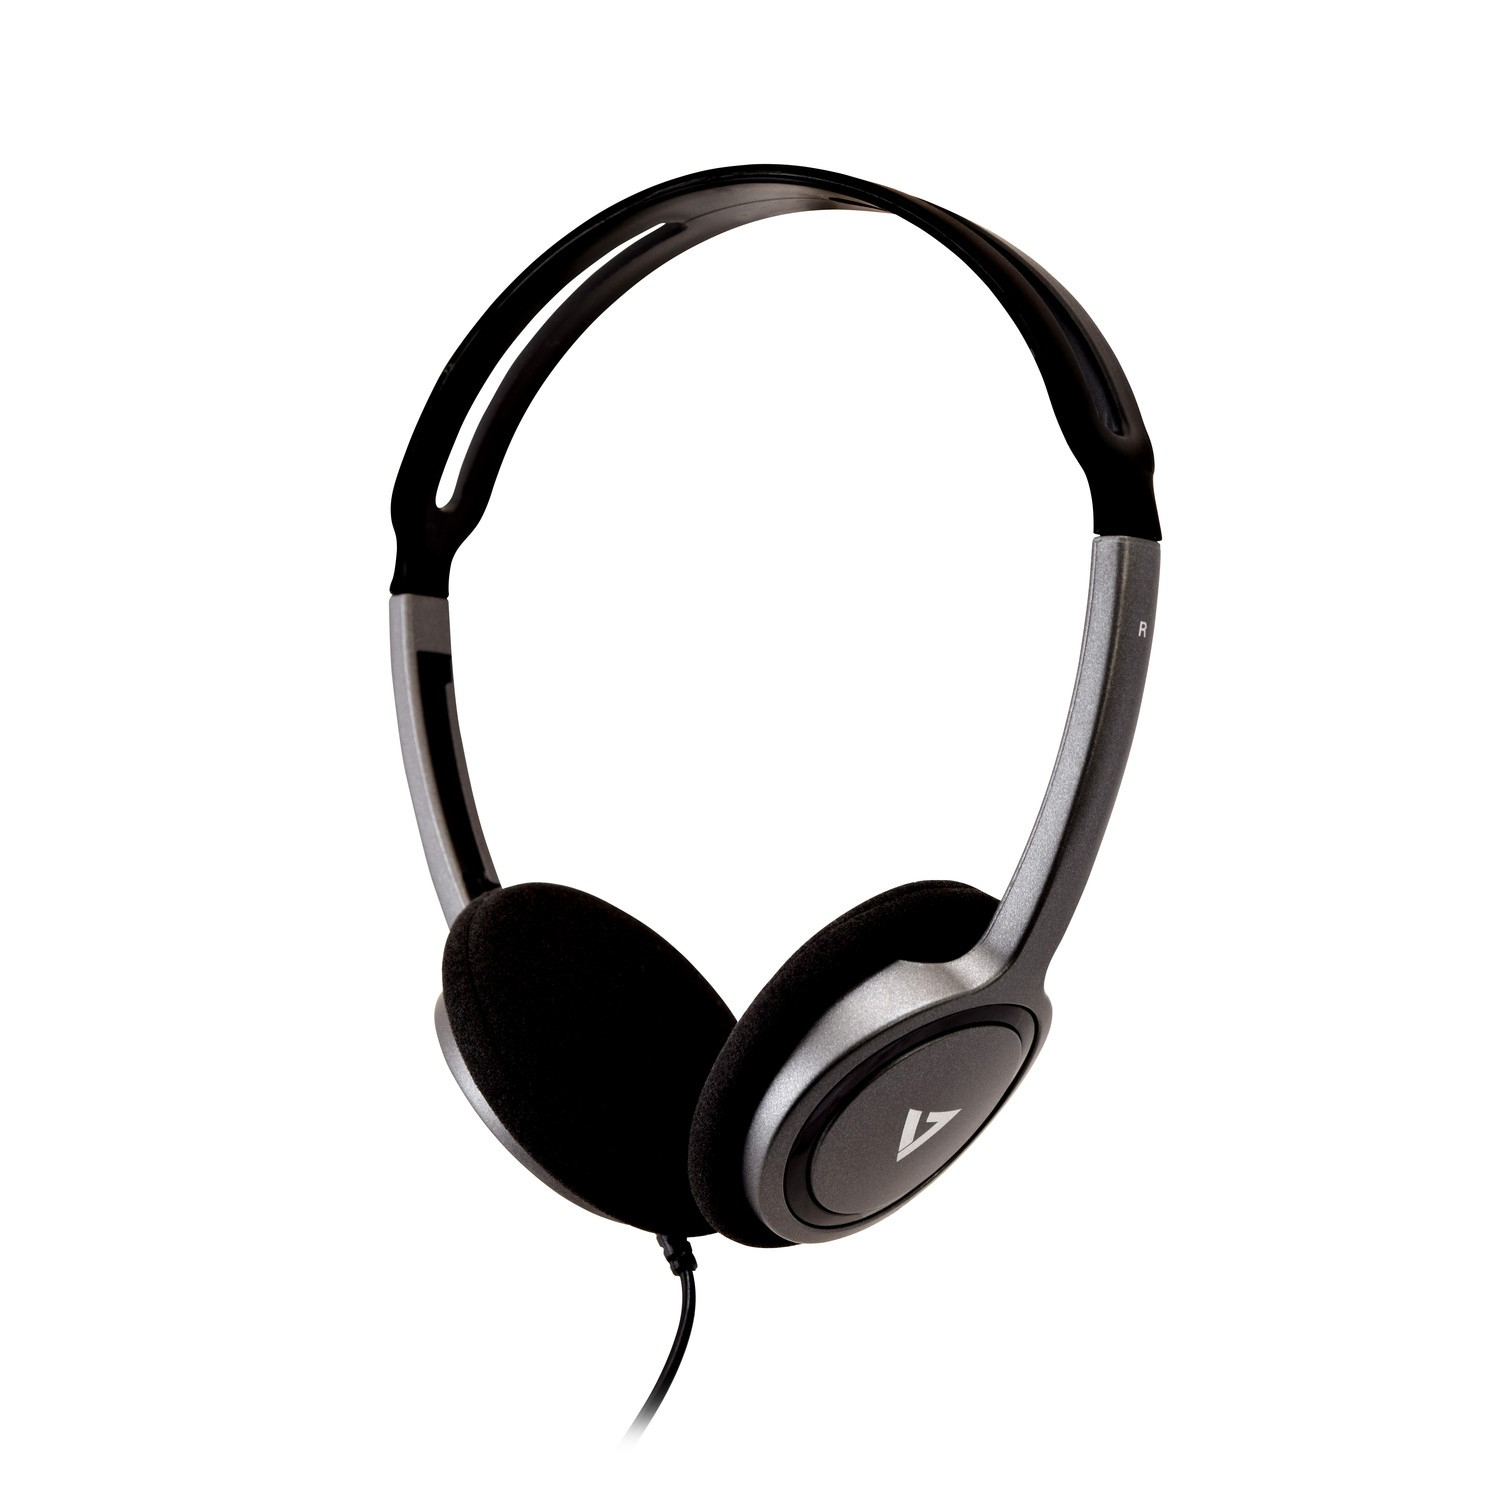 V7 HA310-2EP headphones/headset Head-band 3.5 mm connector Black, Silver